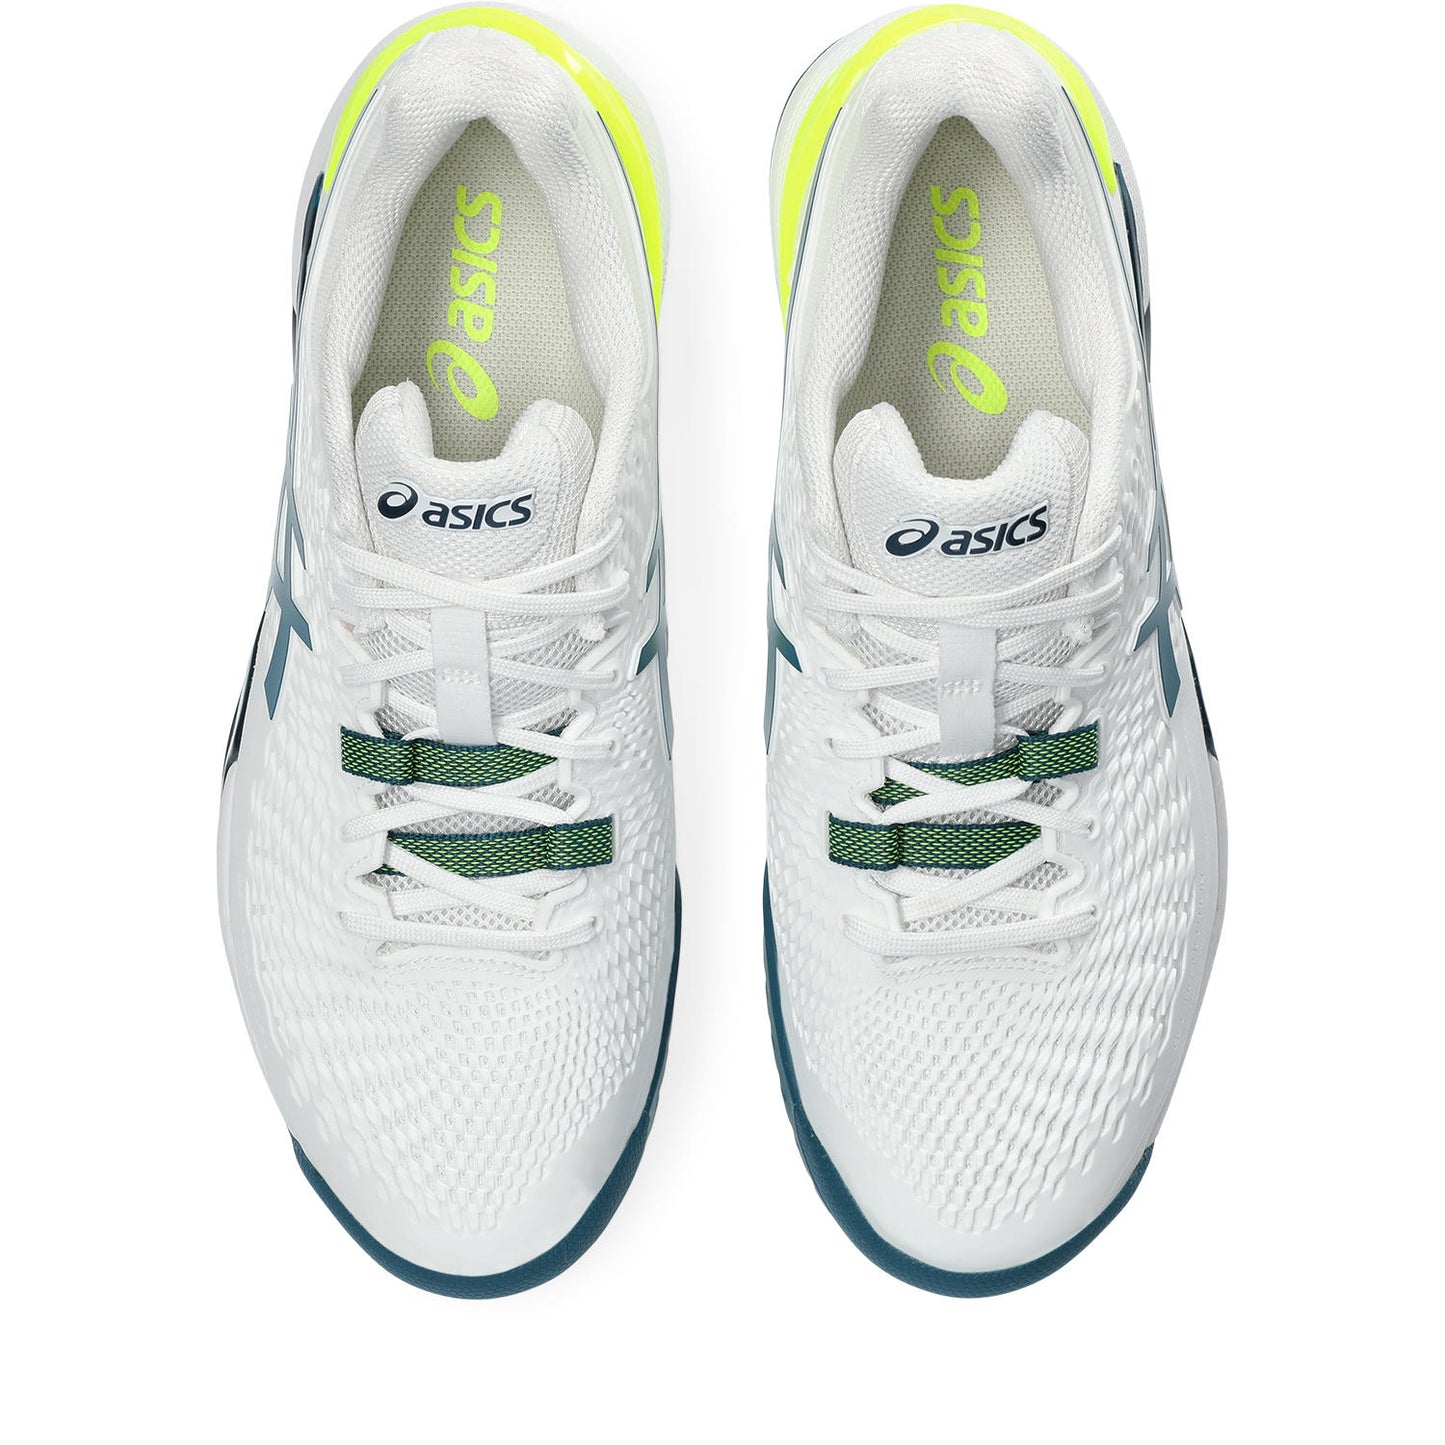 Asics Gel Resolution 9 Men tennis shoes 330.101 White/Teal